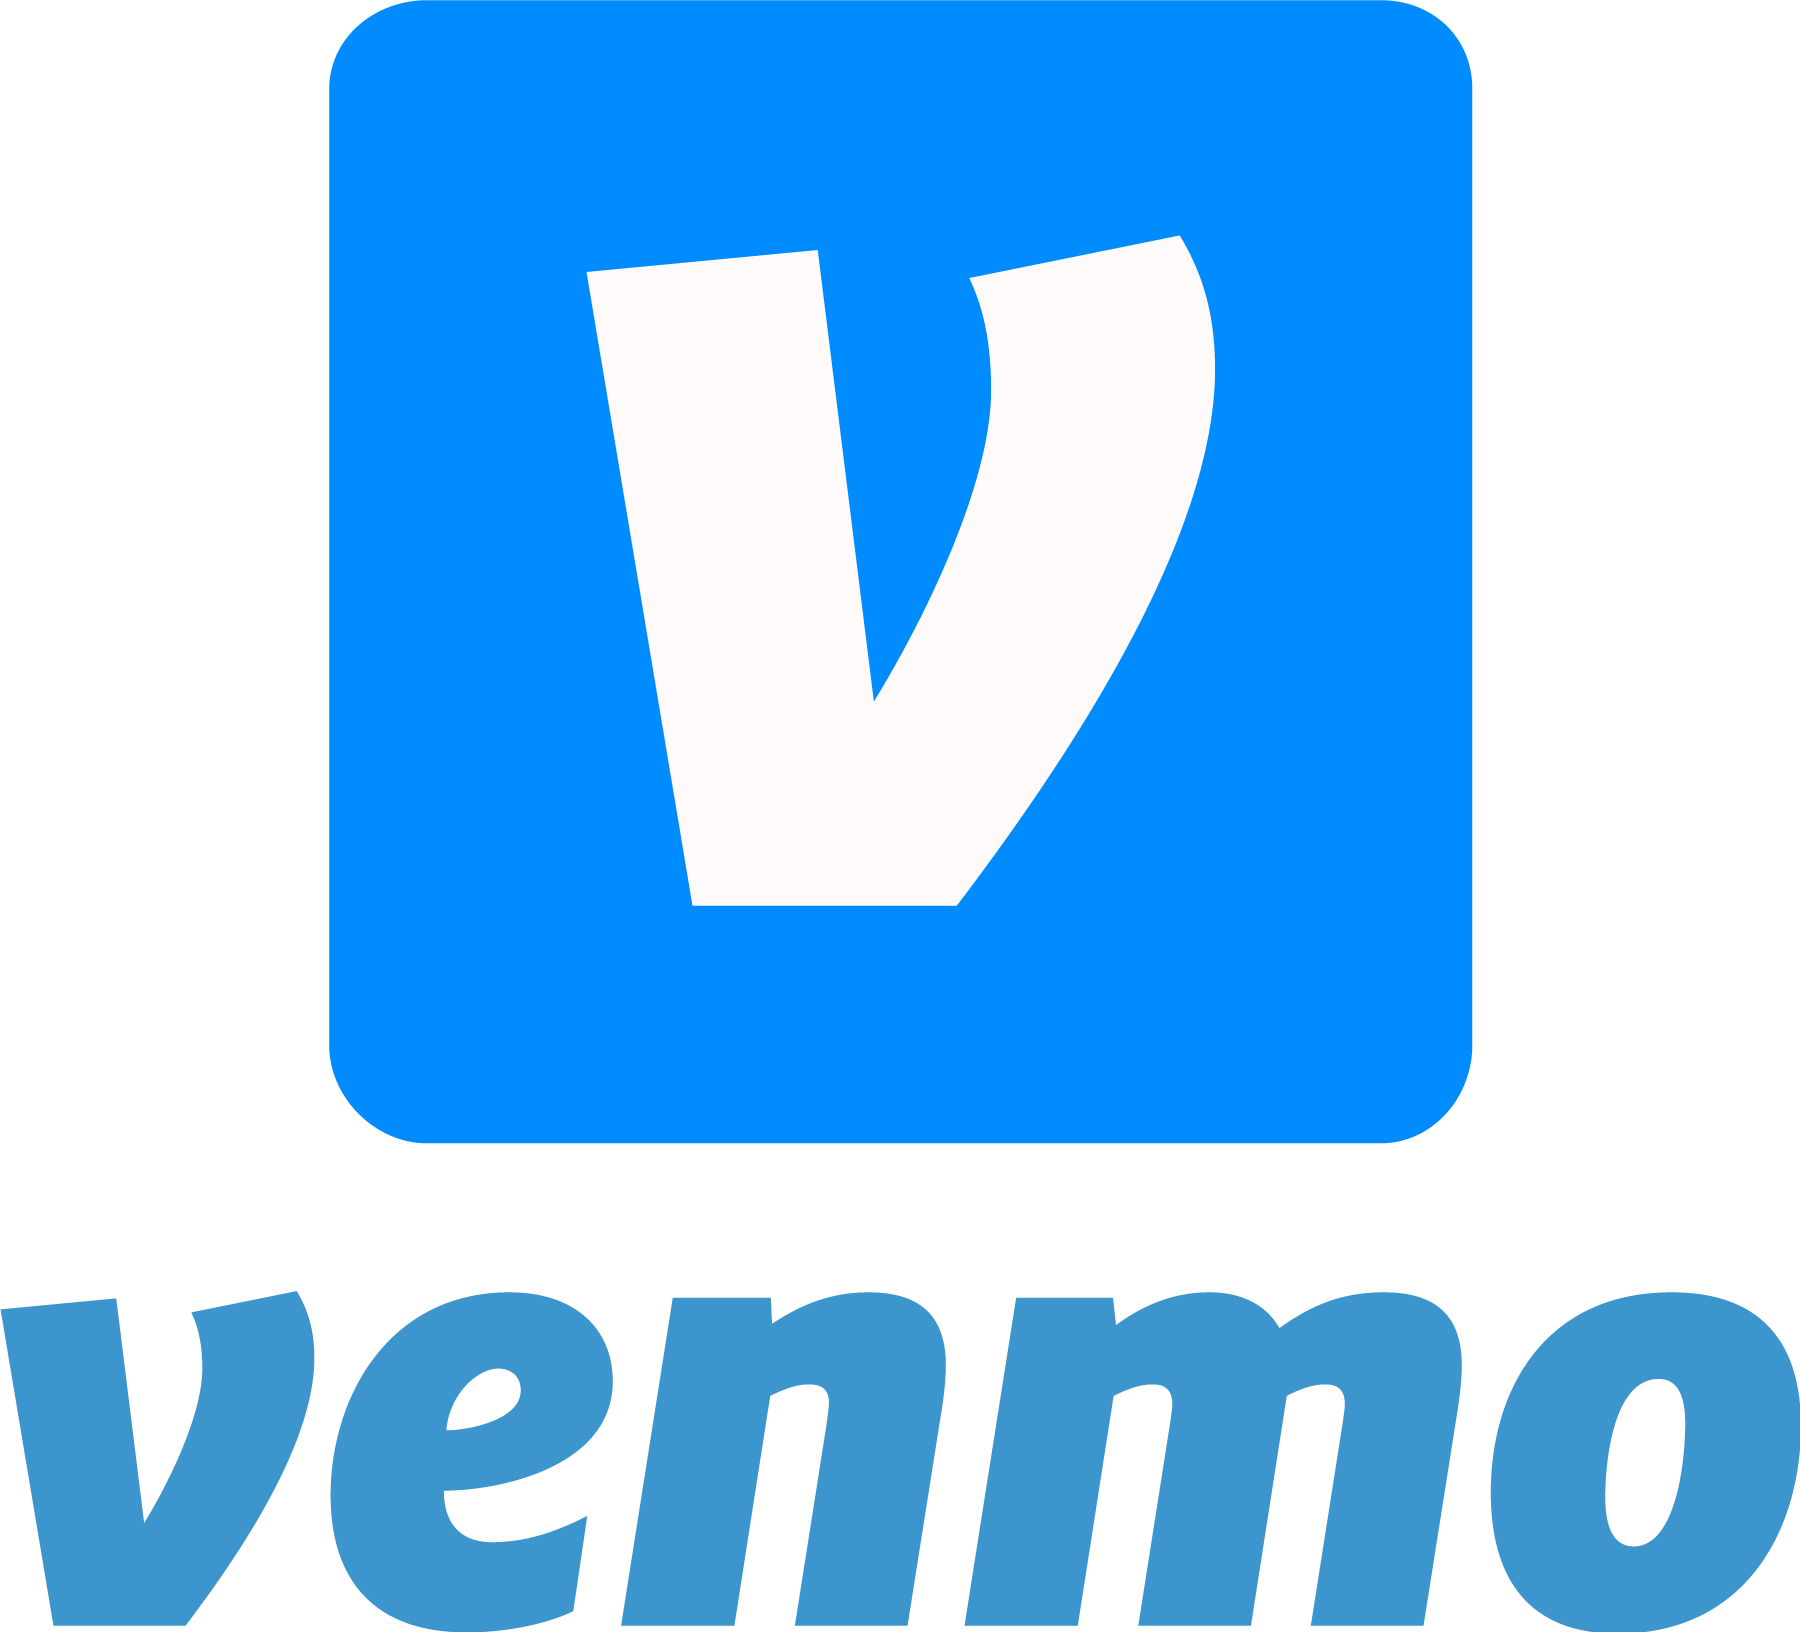 Venmo Logo PNG Images Free Download